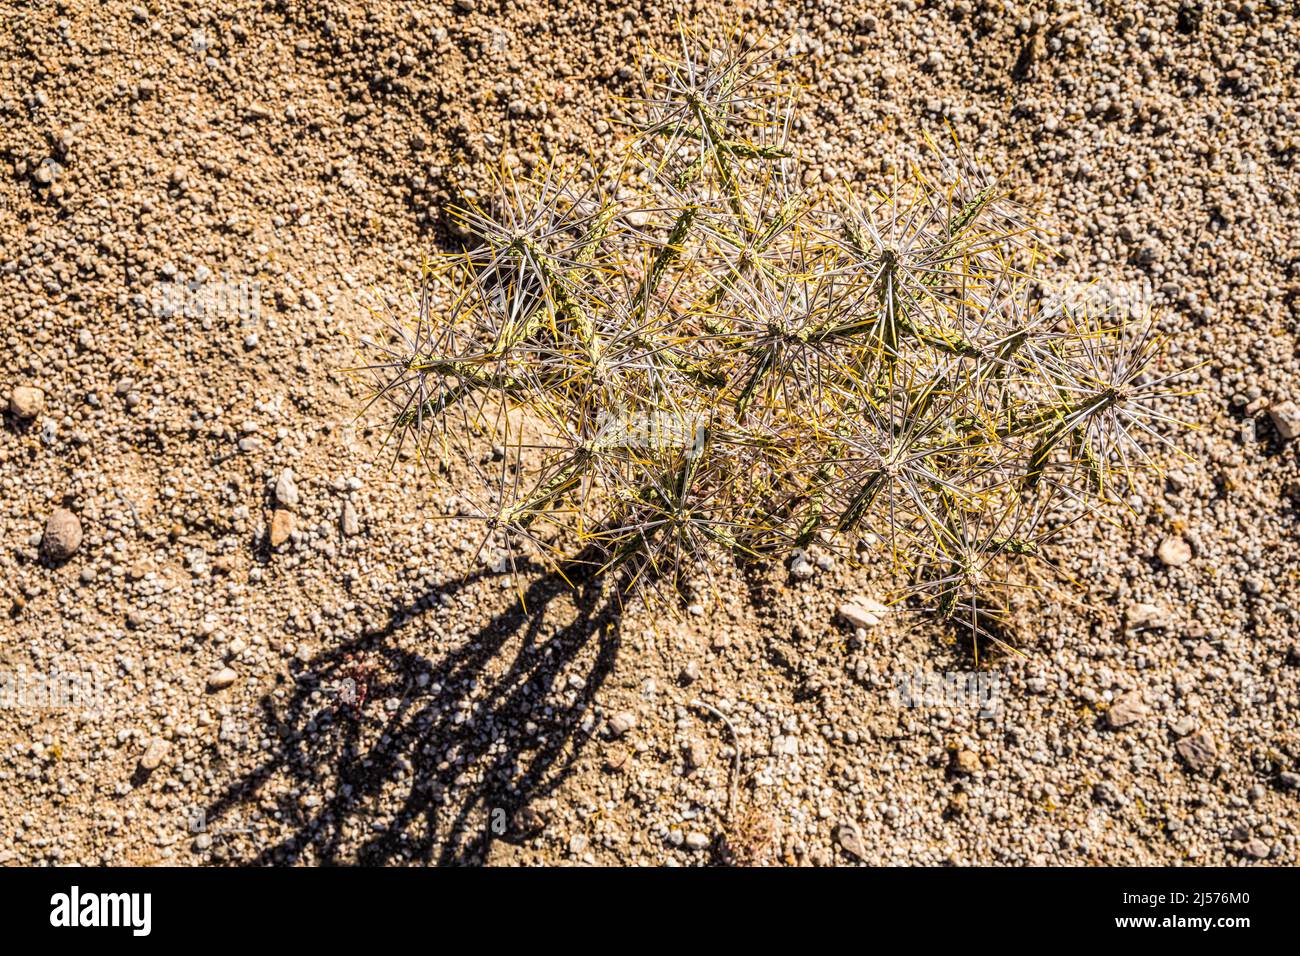 Pencil Cholla grows on the gravelly dry ground, Joshua Tree National Park, California, USA. Stock Photo